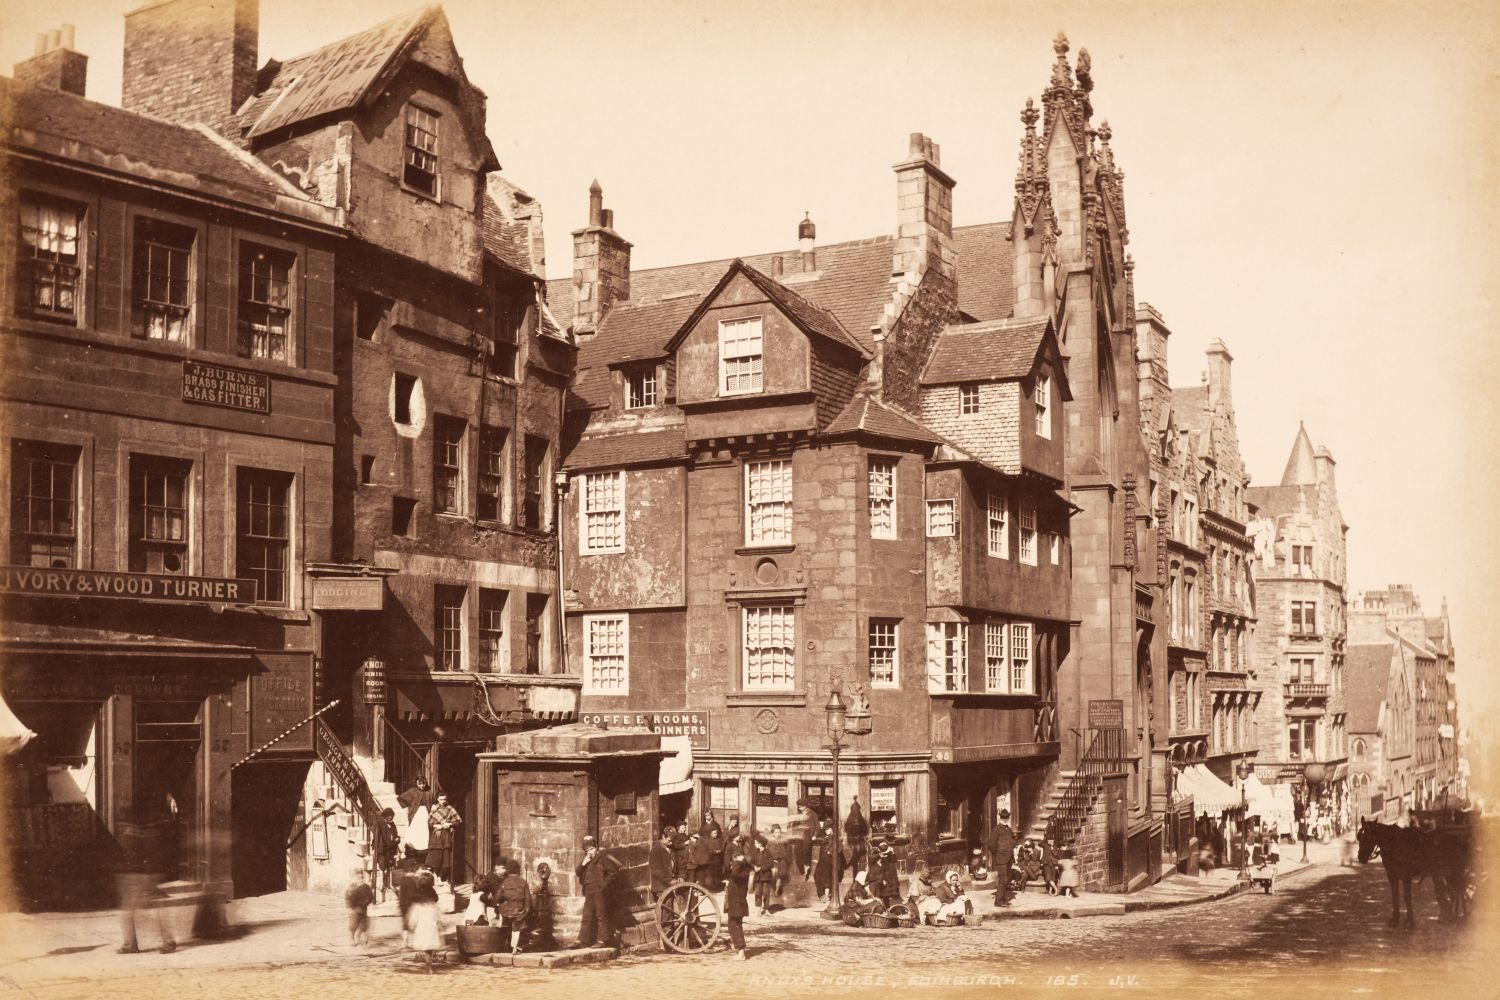 Edinburgh. An album containing 20 mounted albumen print photographs, c. 1880